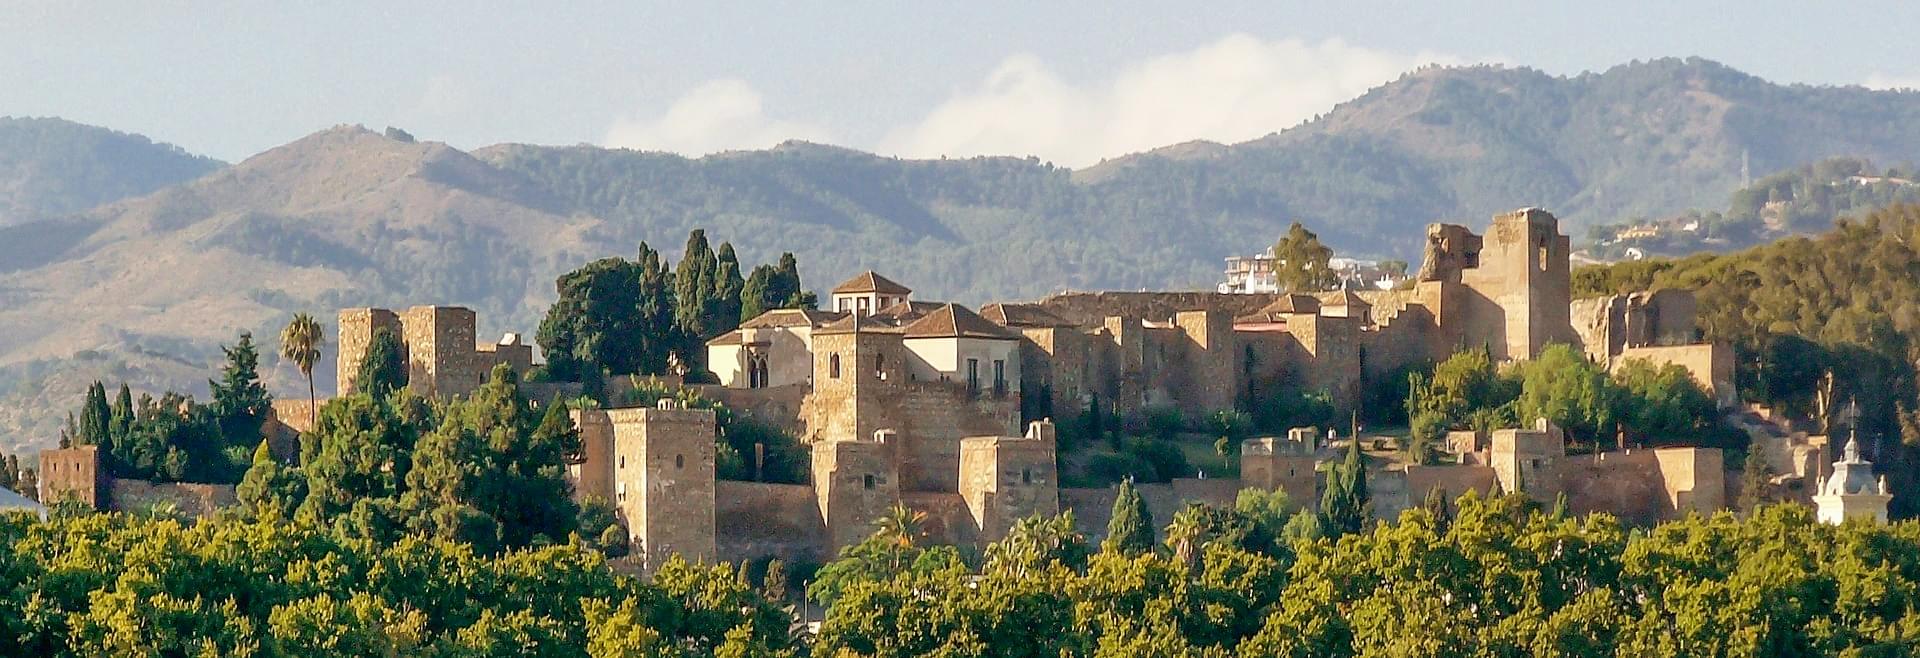 Alcazaba Overview